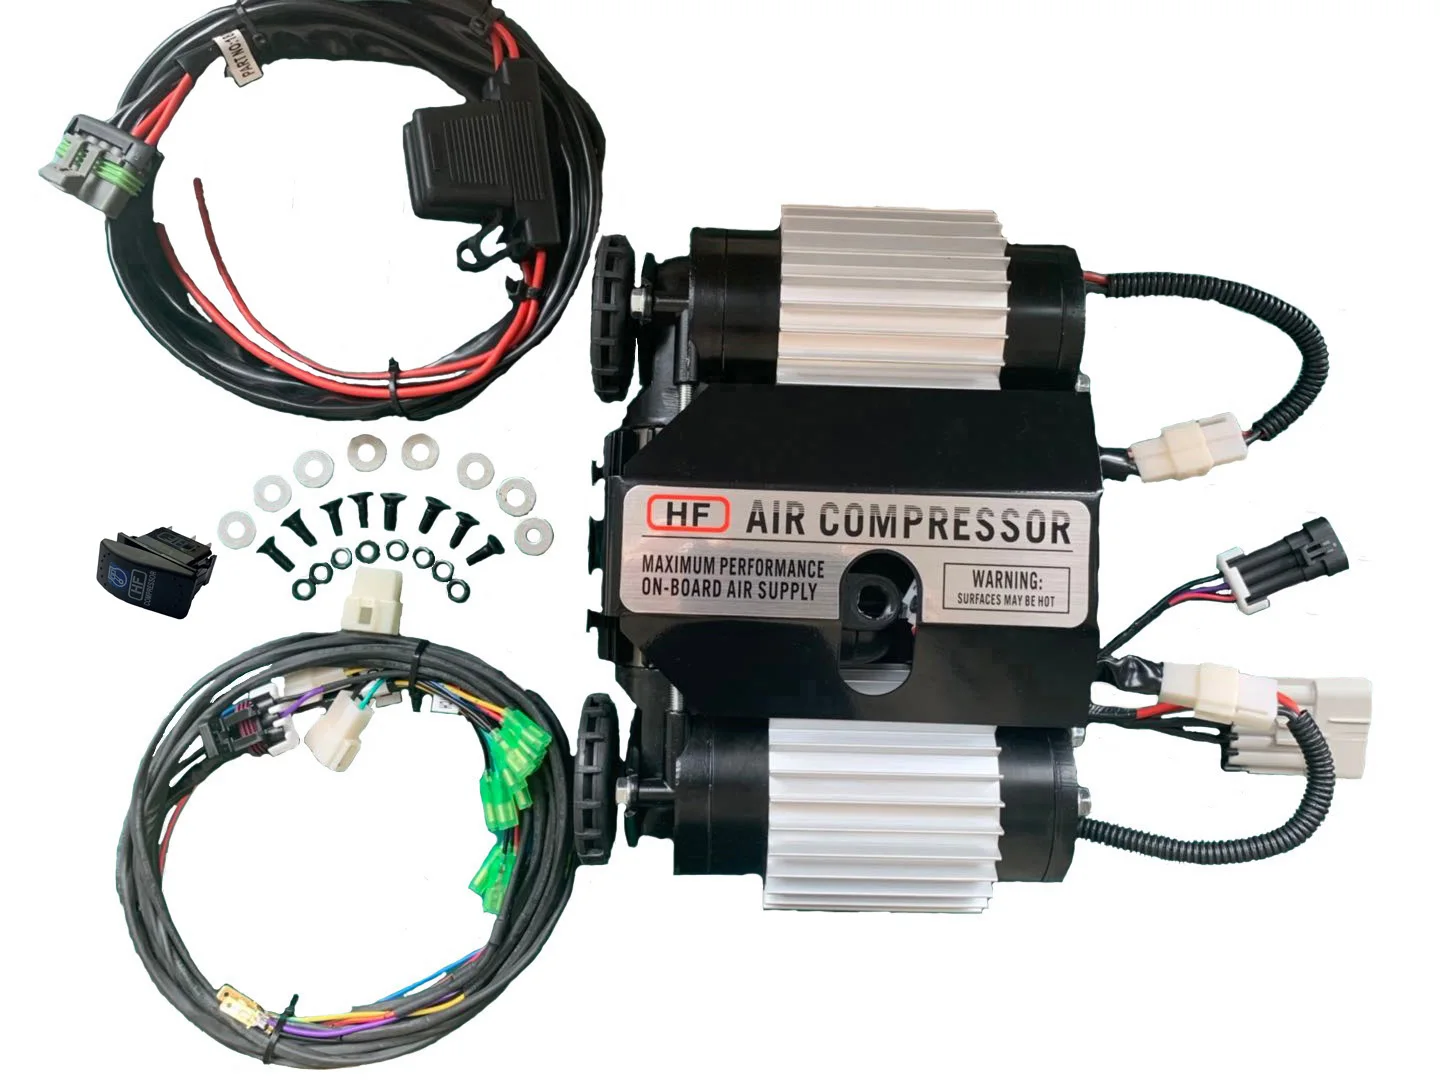 Air Compressor Hf 4x4 Accessories Twin Air Compressor 12v High